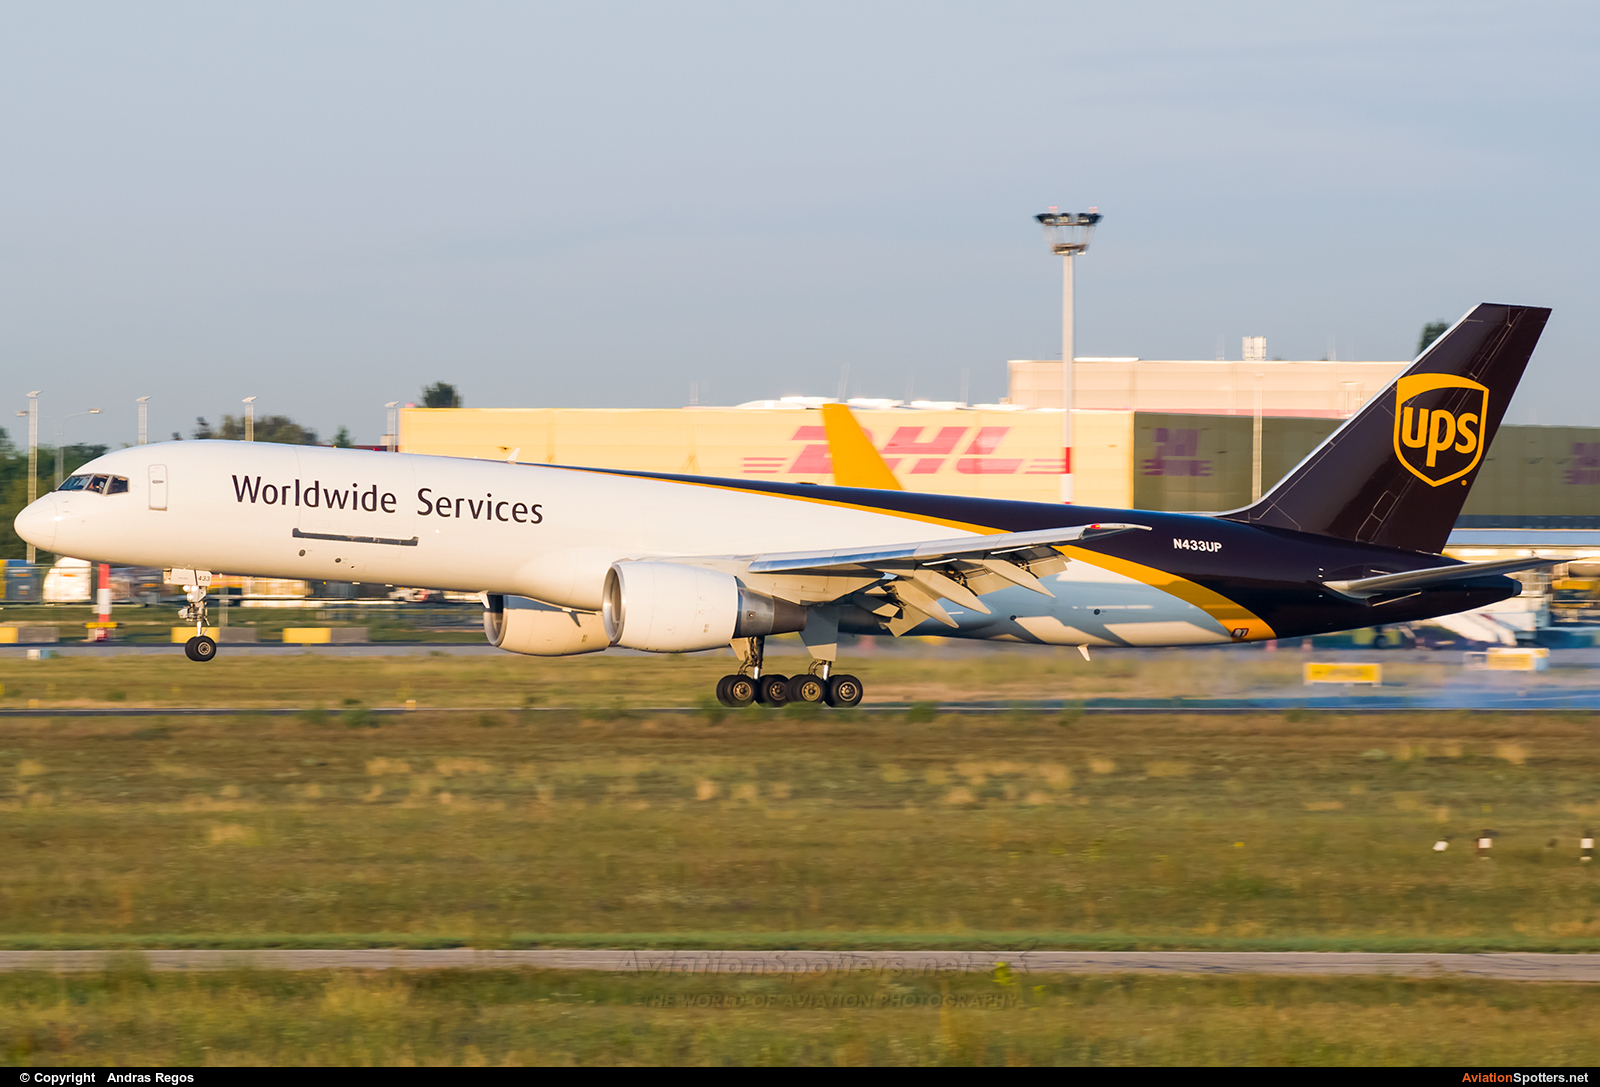 UPS - United Parcel Service  -  757-200F  (N433UP) By Andras Regos (regos)